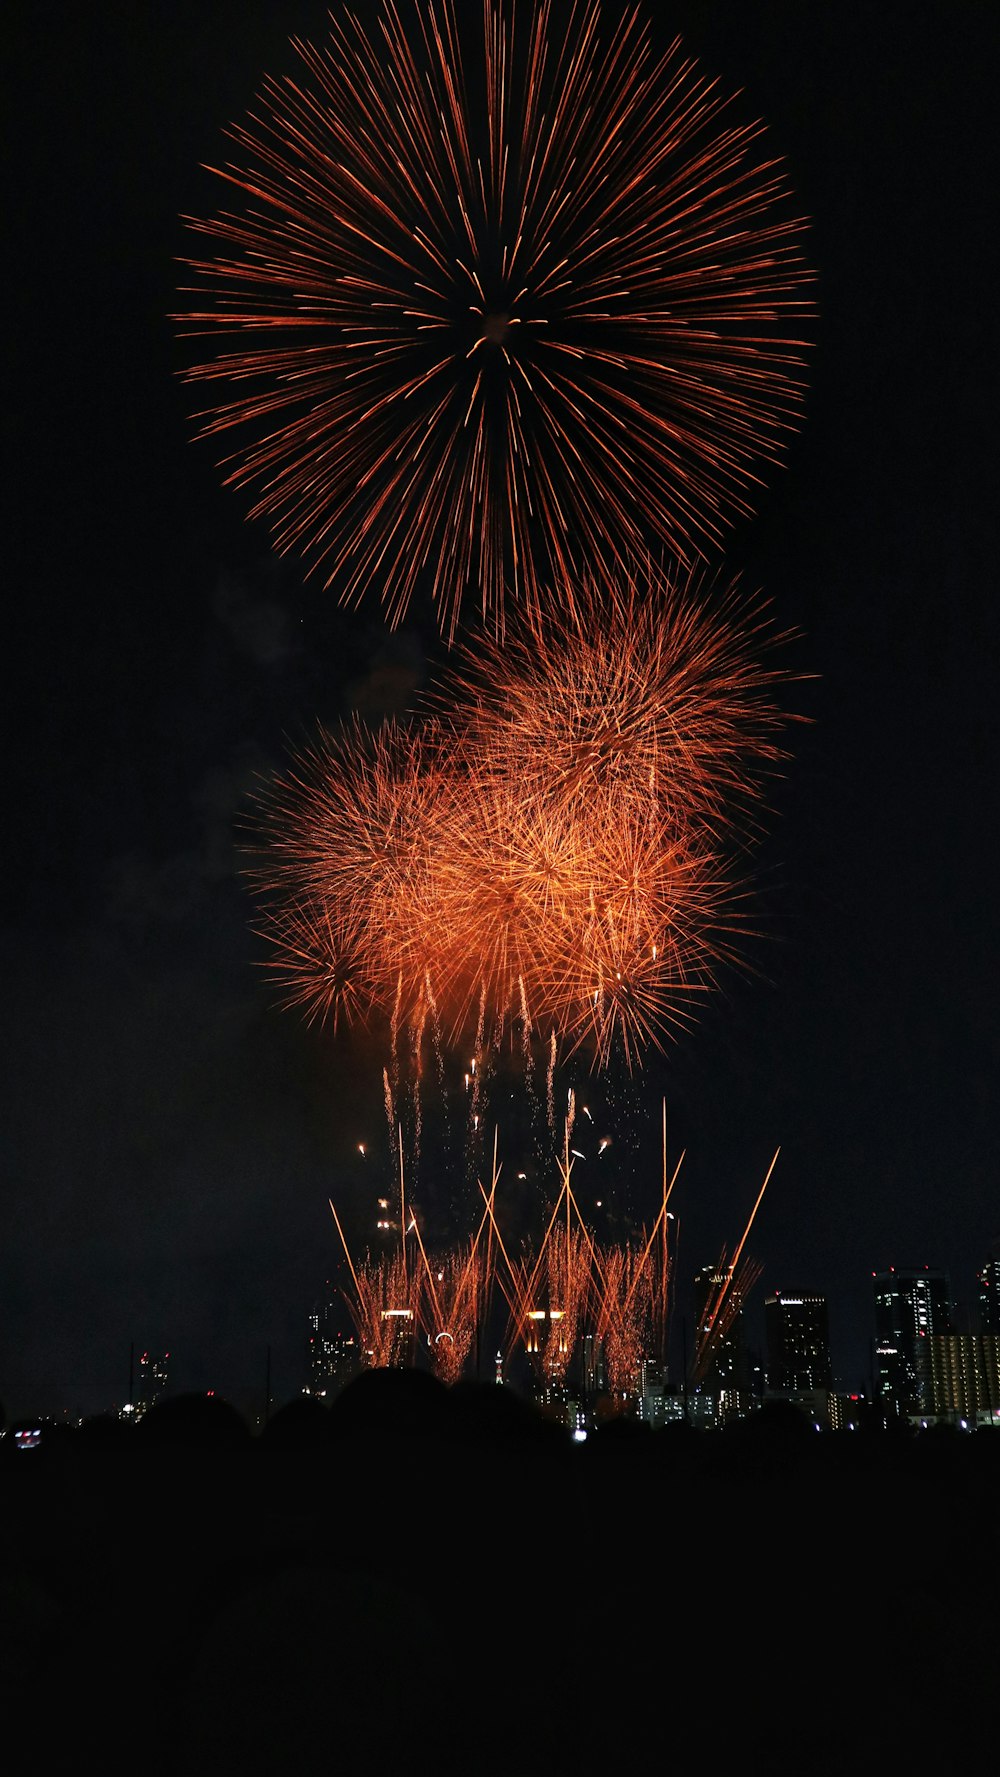 timelapse photo of fireworks display